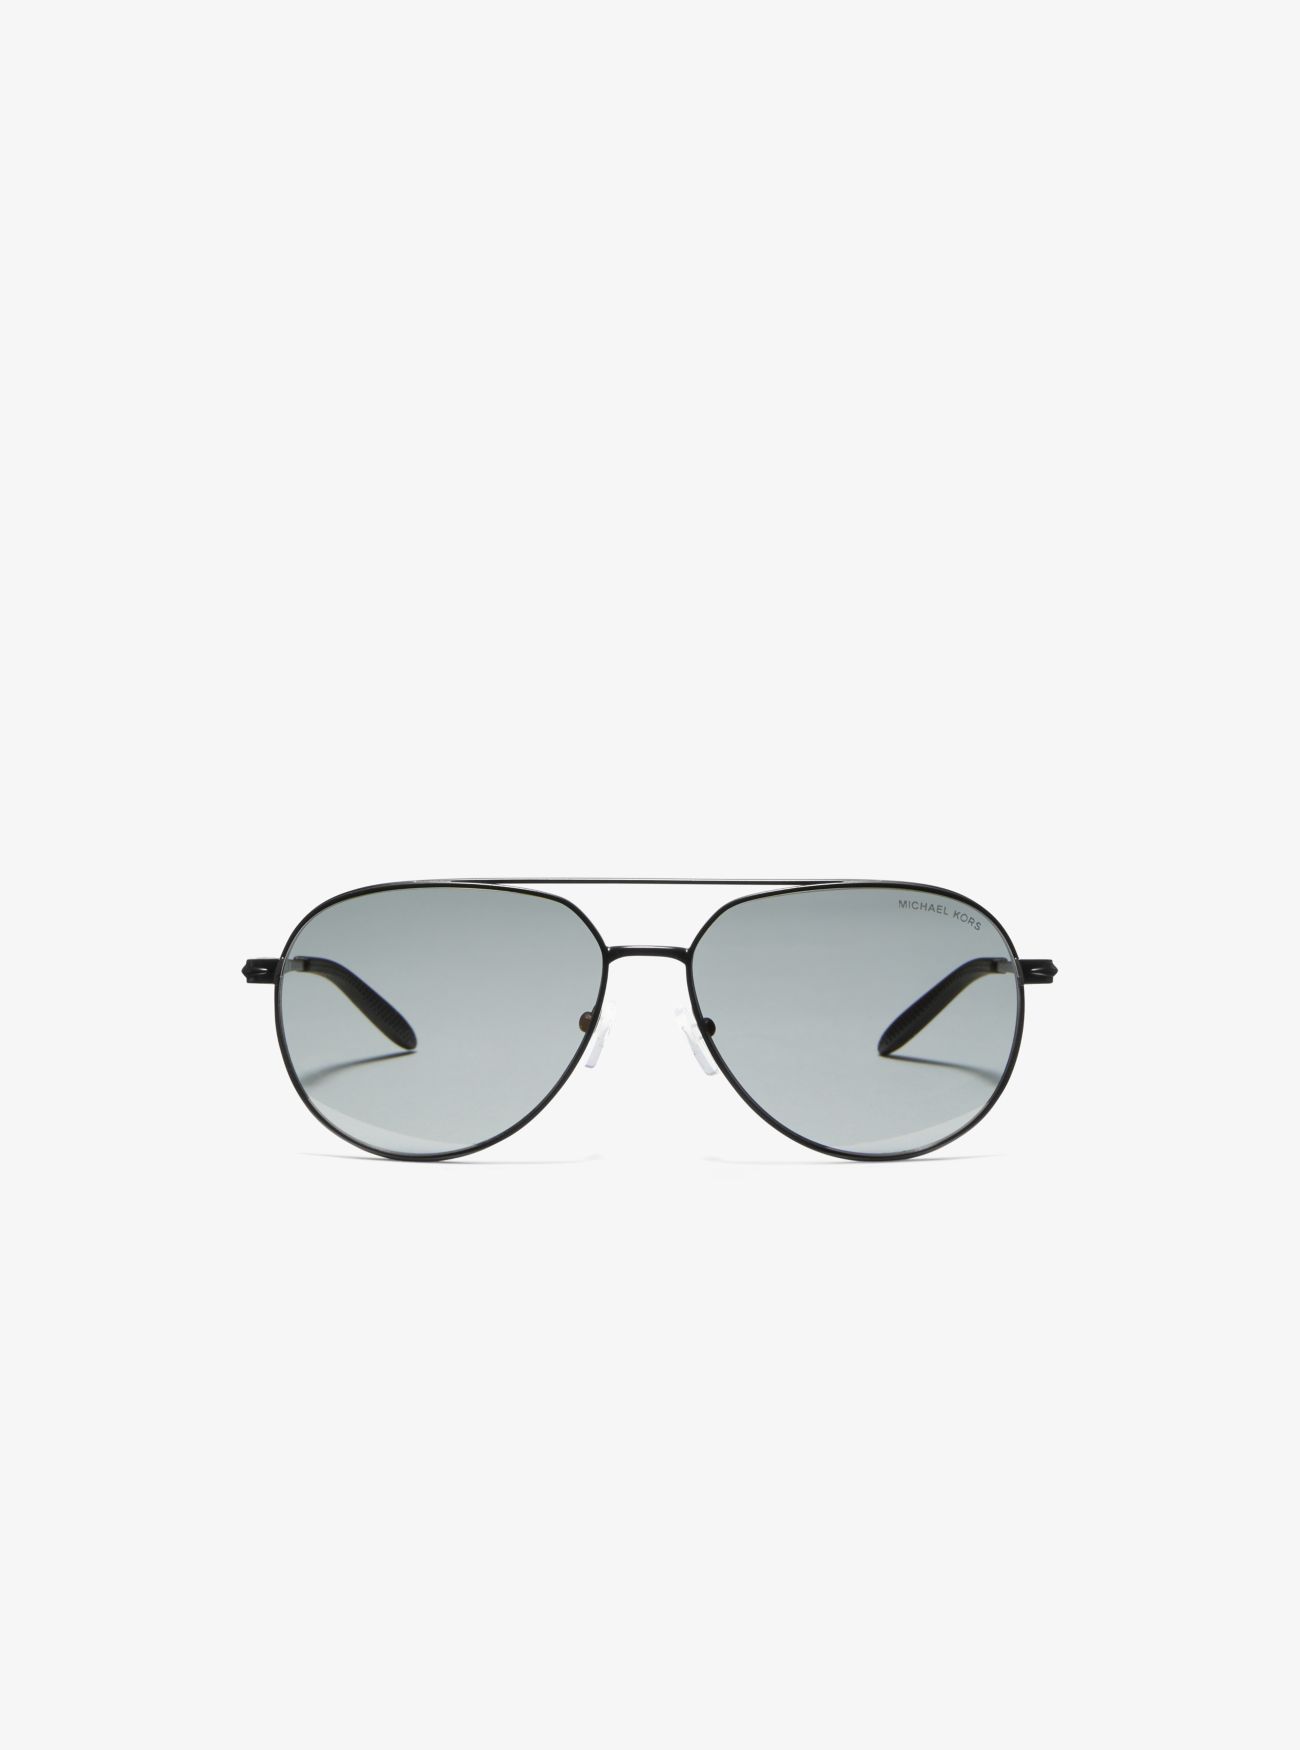 MK Highlands Sunglasses - Black - Michael Kors